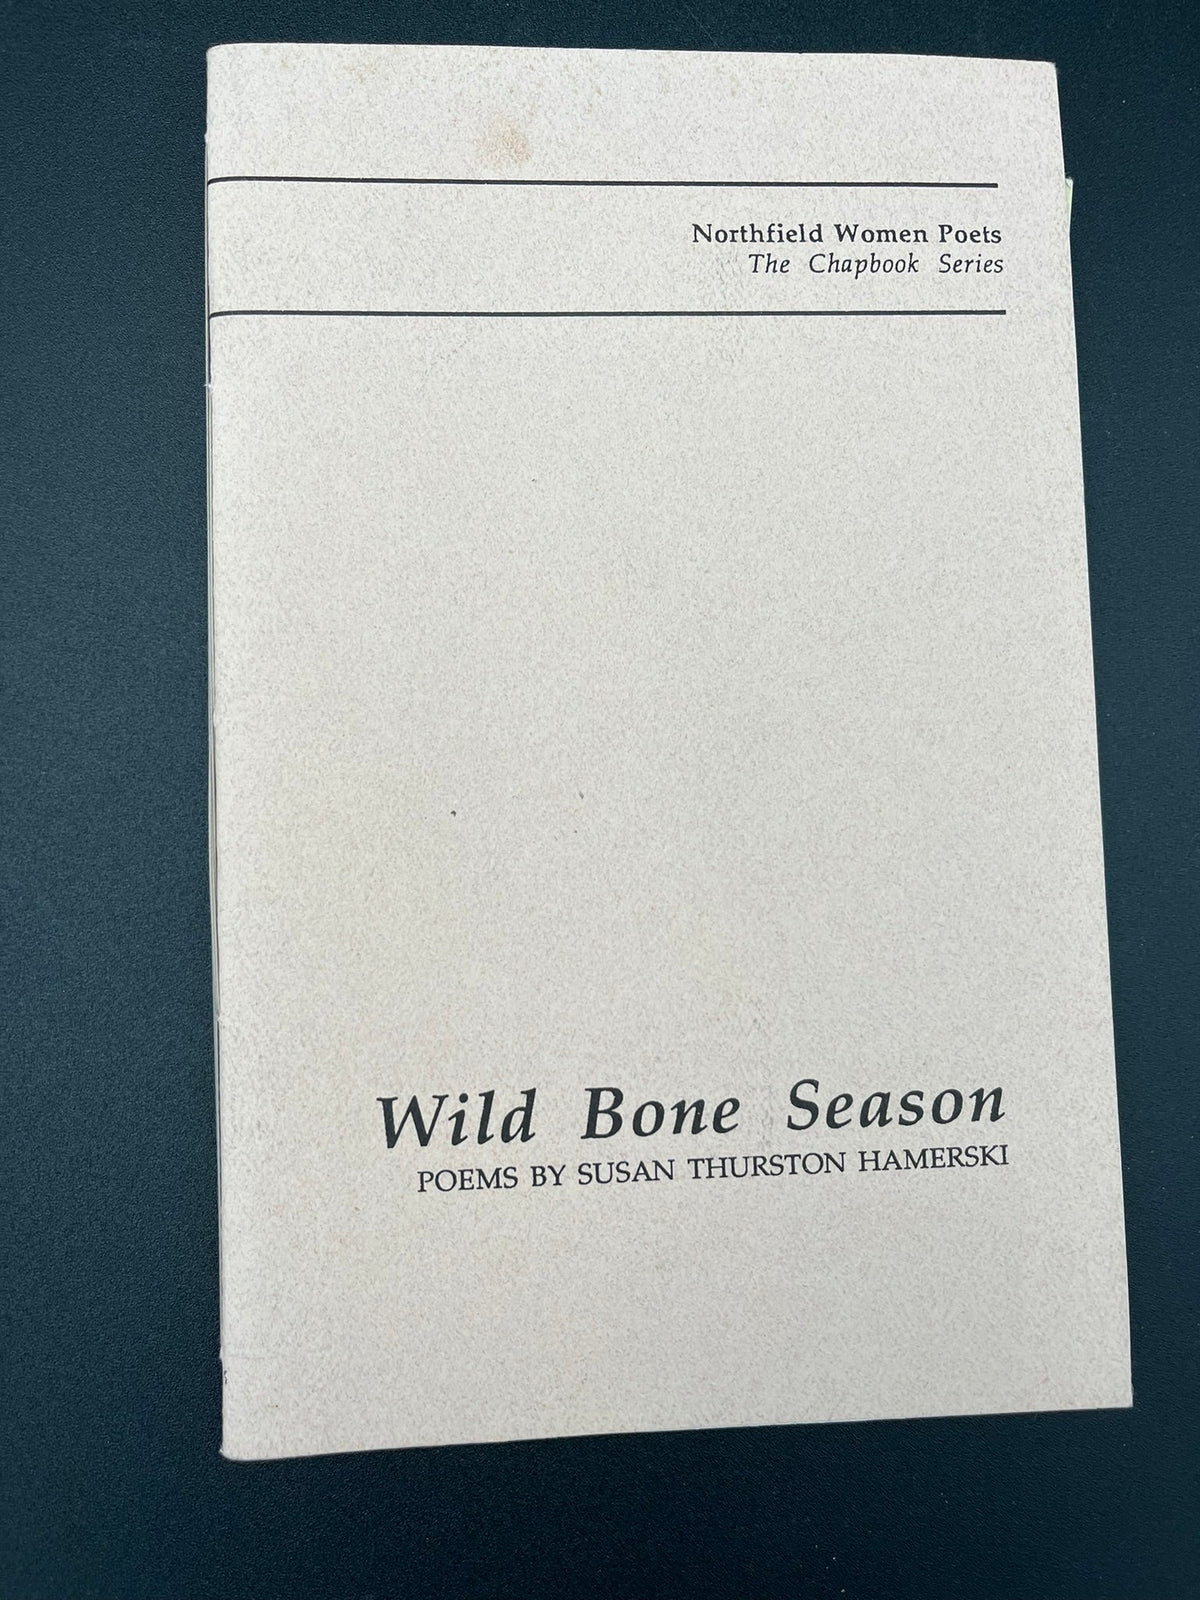 Wild Bone Season